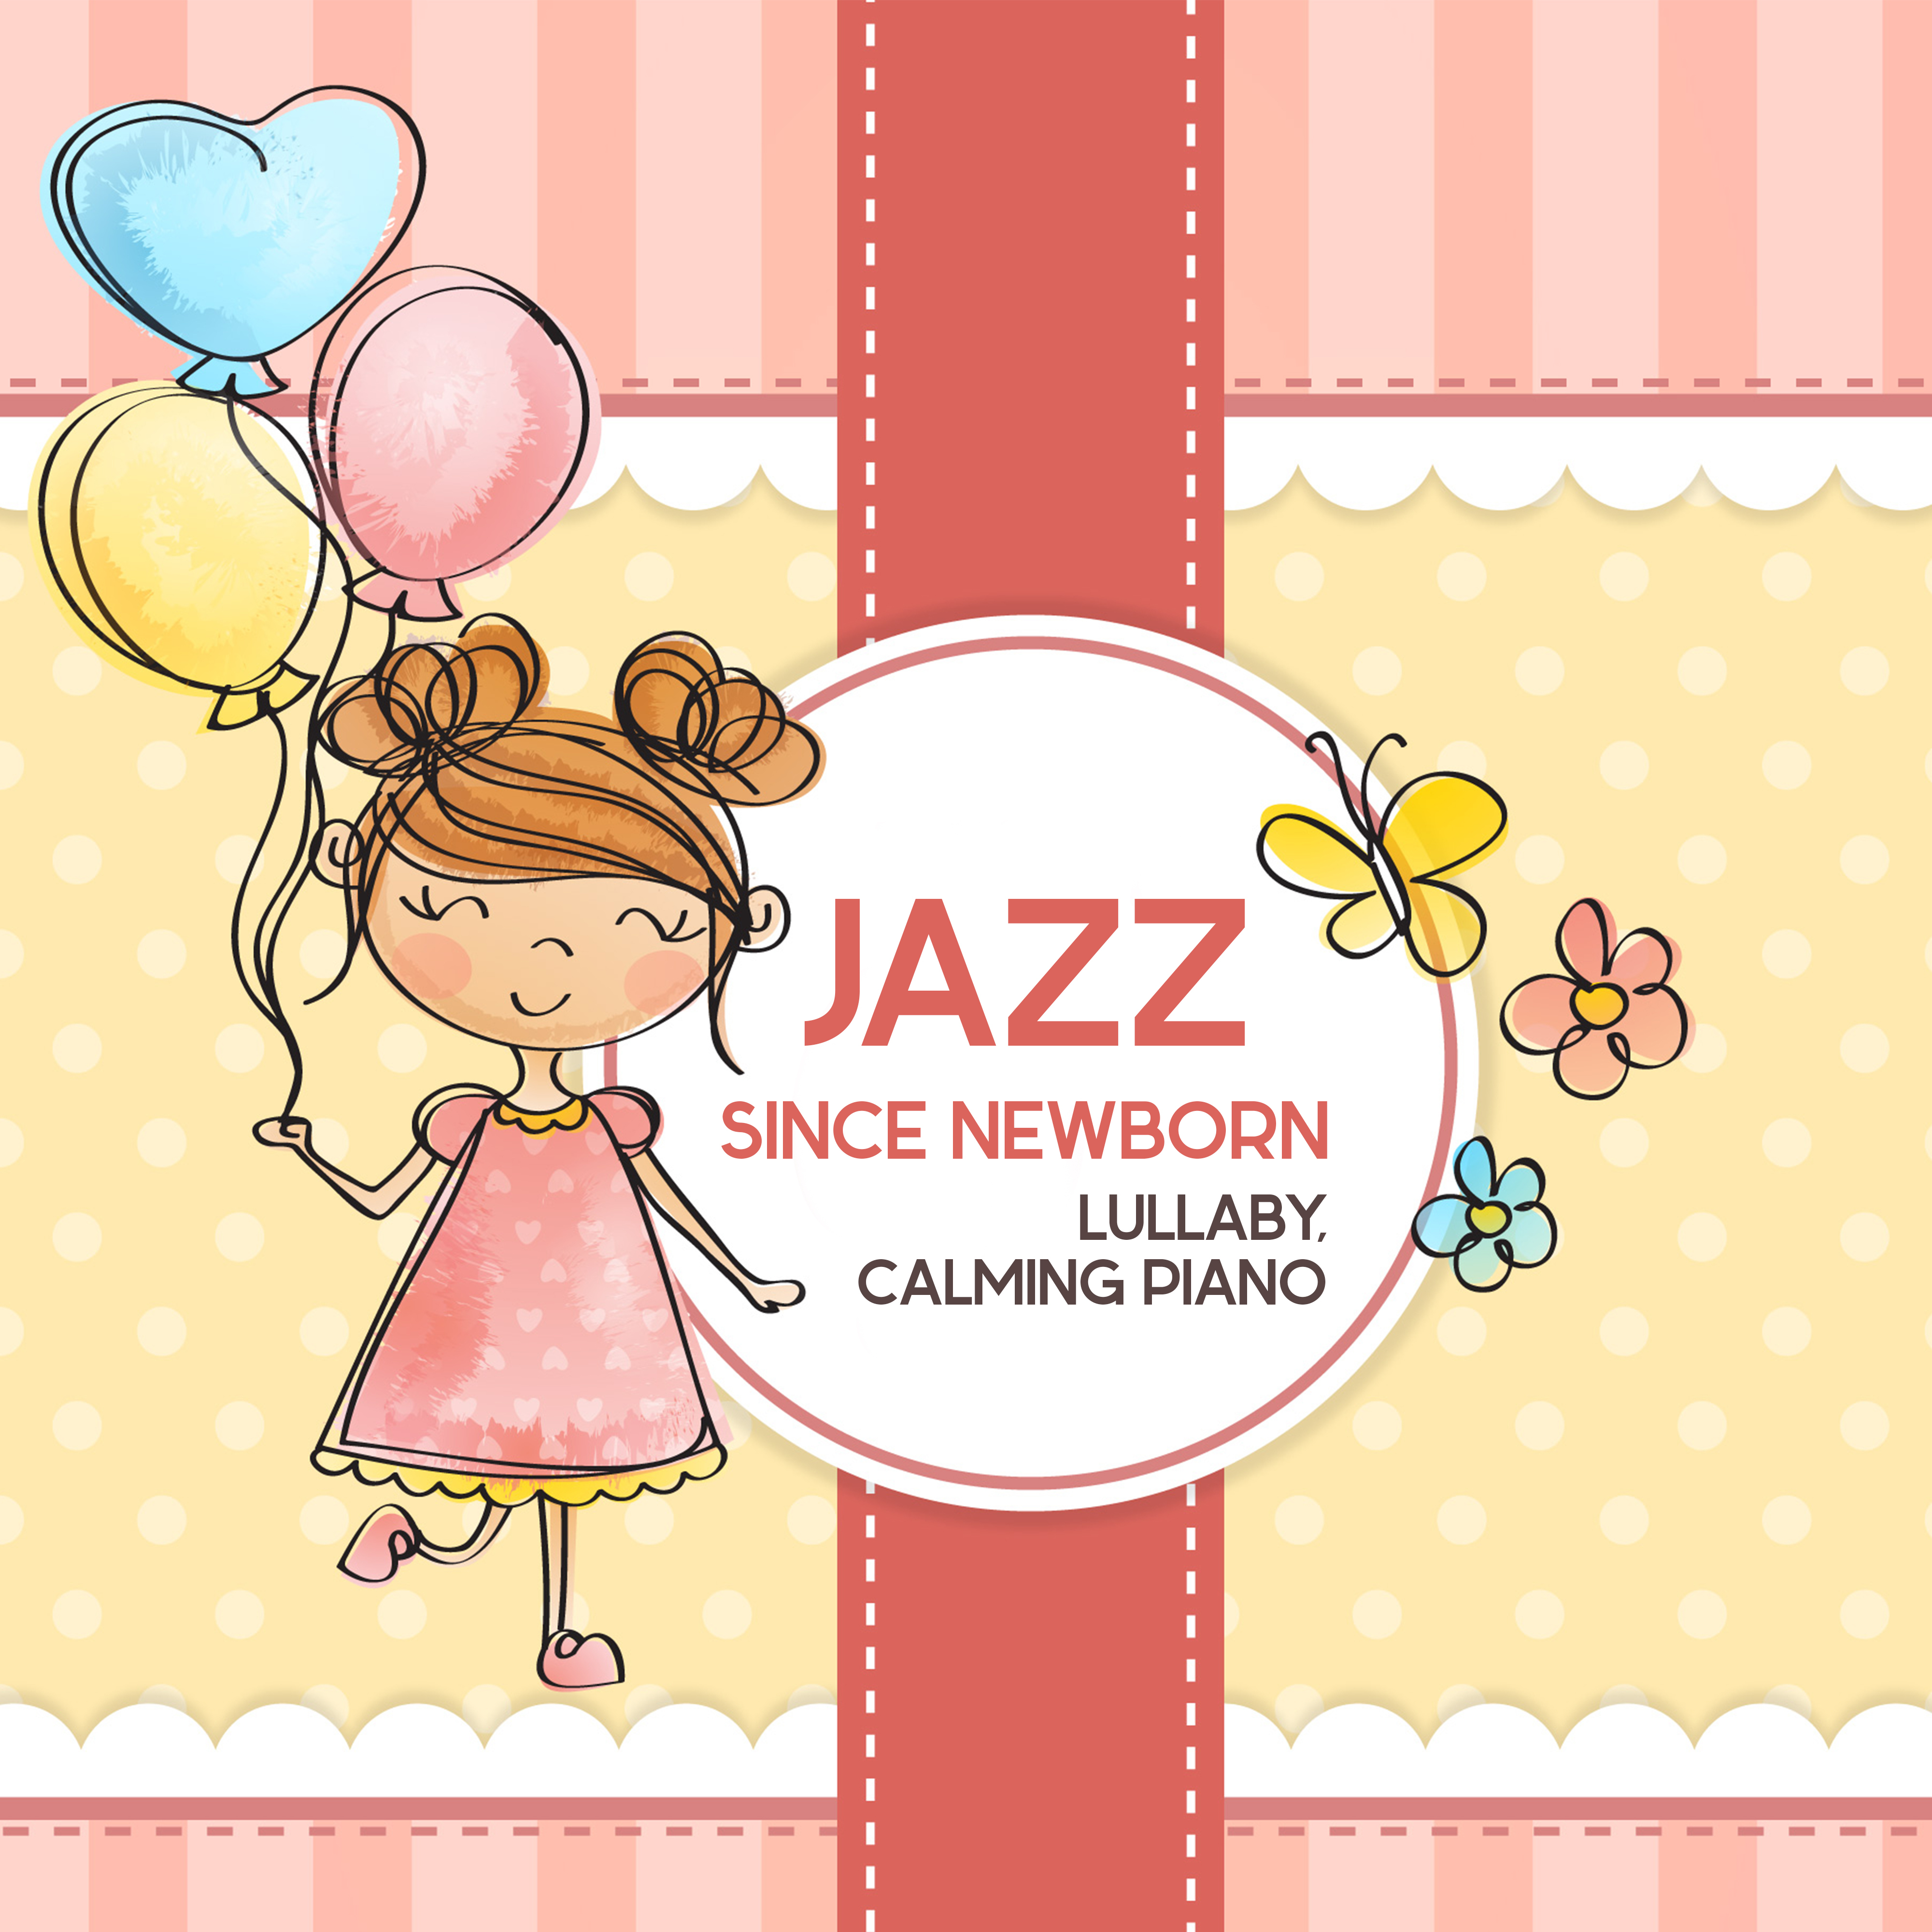 Jazz since Newborn: Lullaby, Calming Piano